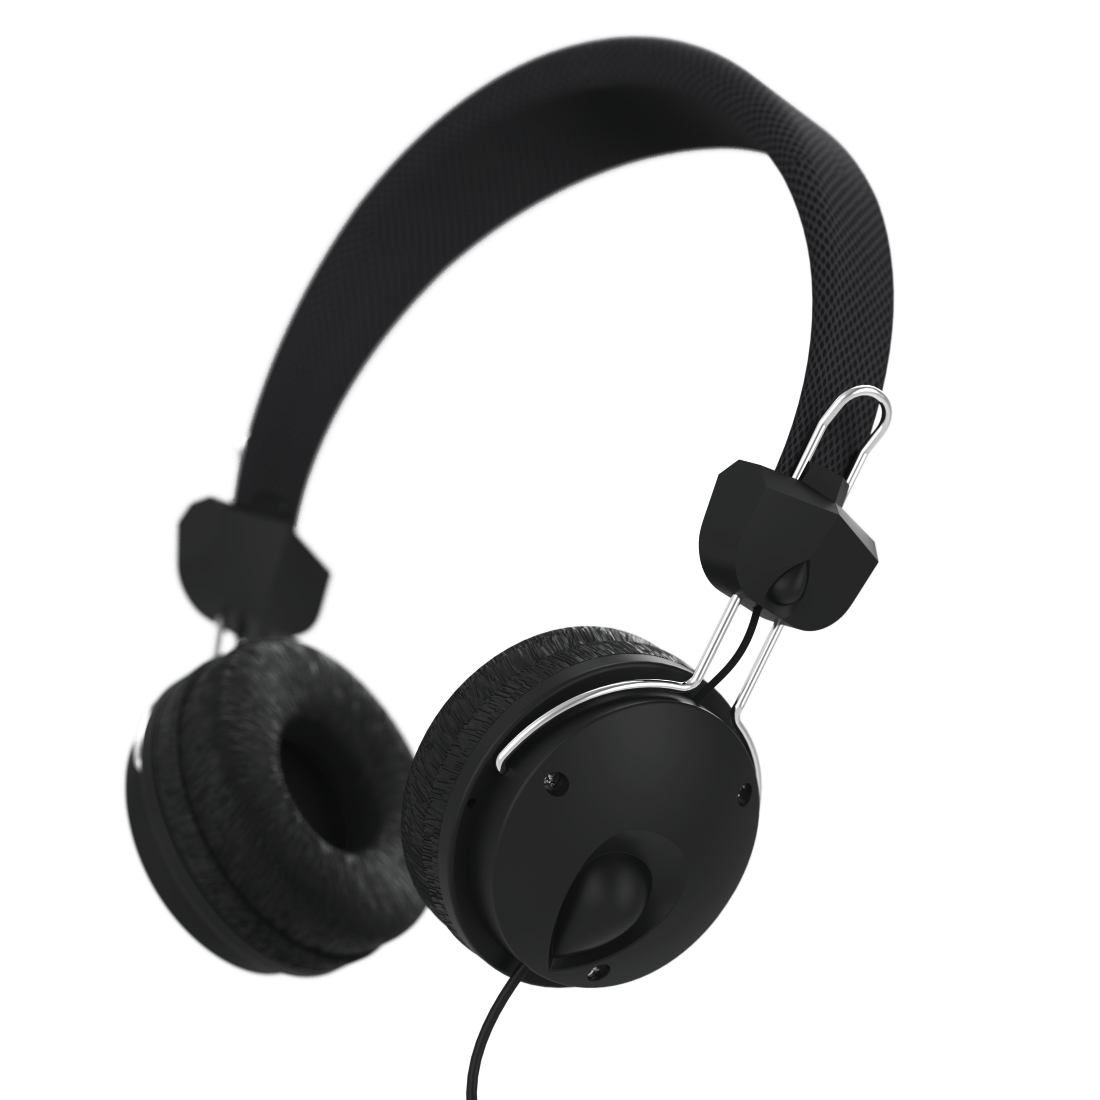 Hama HK-229 On-Ear Stereo Headphones